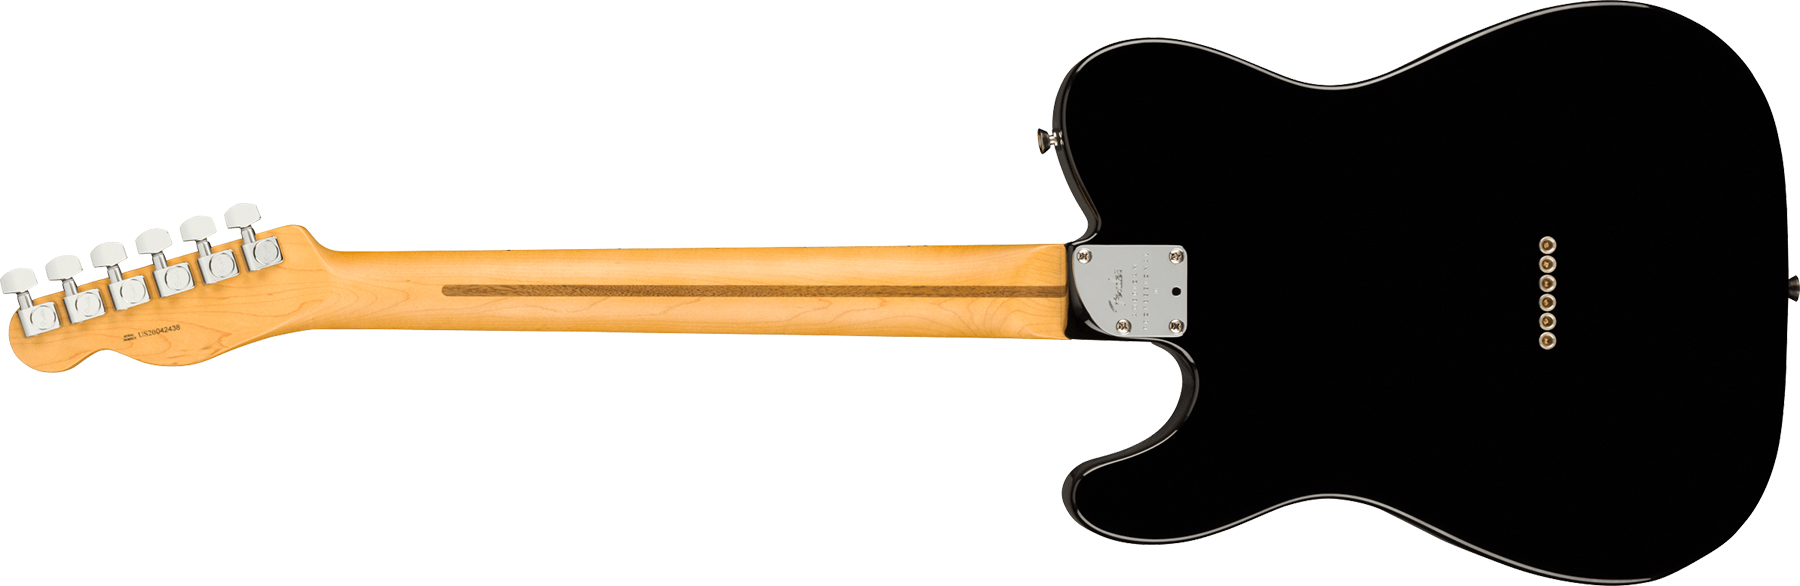 Fender Tele American Professional Ii Usa Mn - Black - Tel shape electric guitar - Variation 1